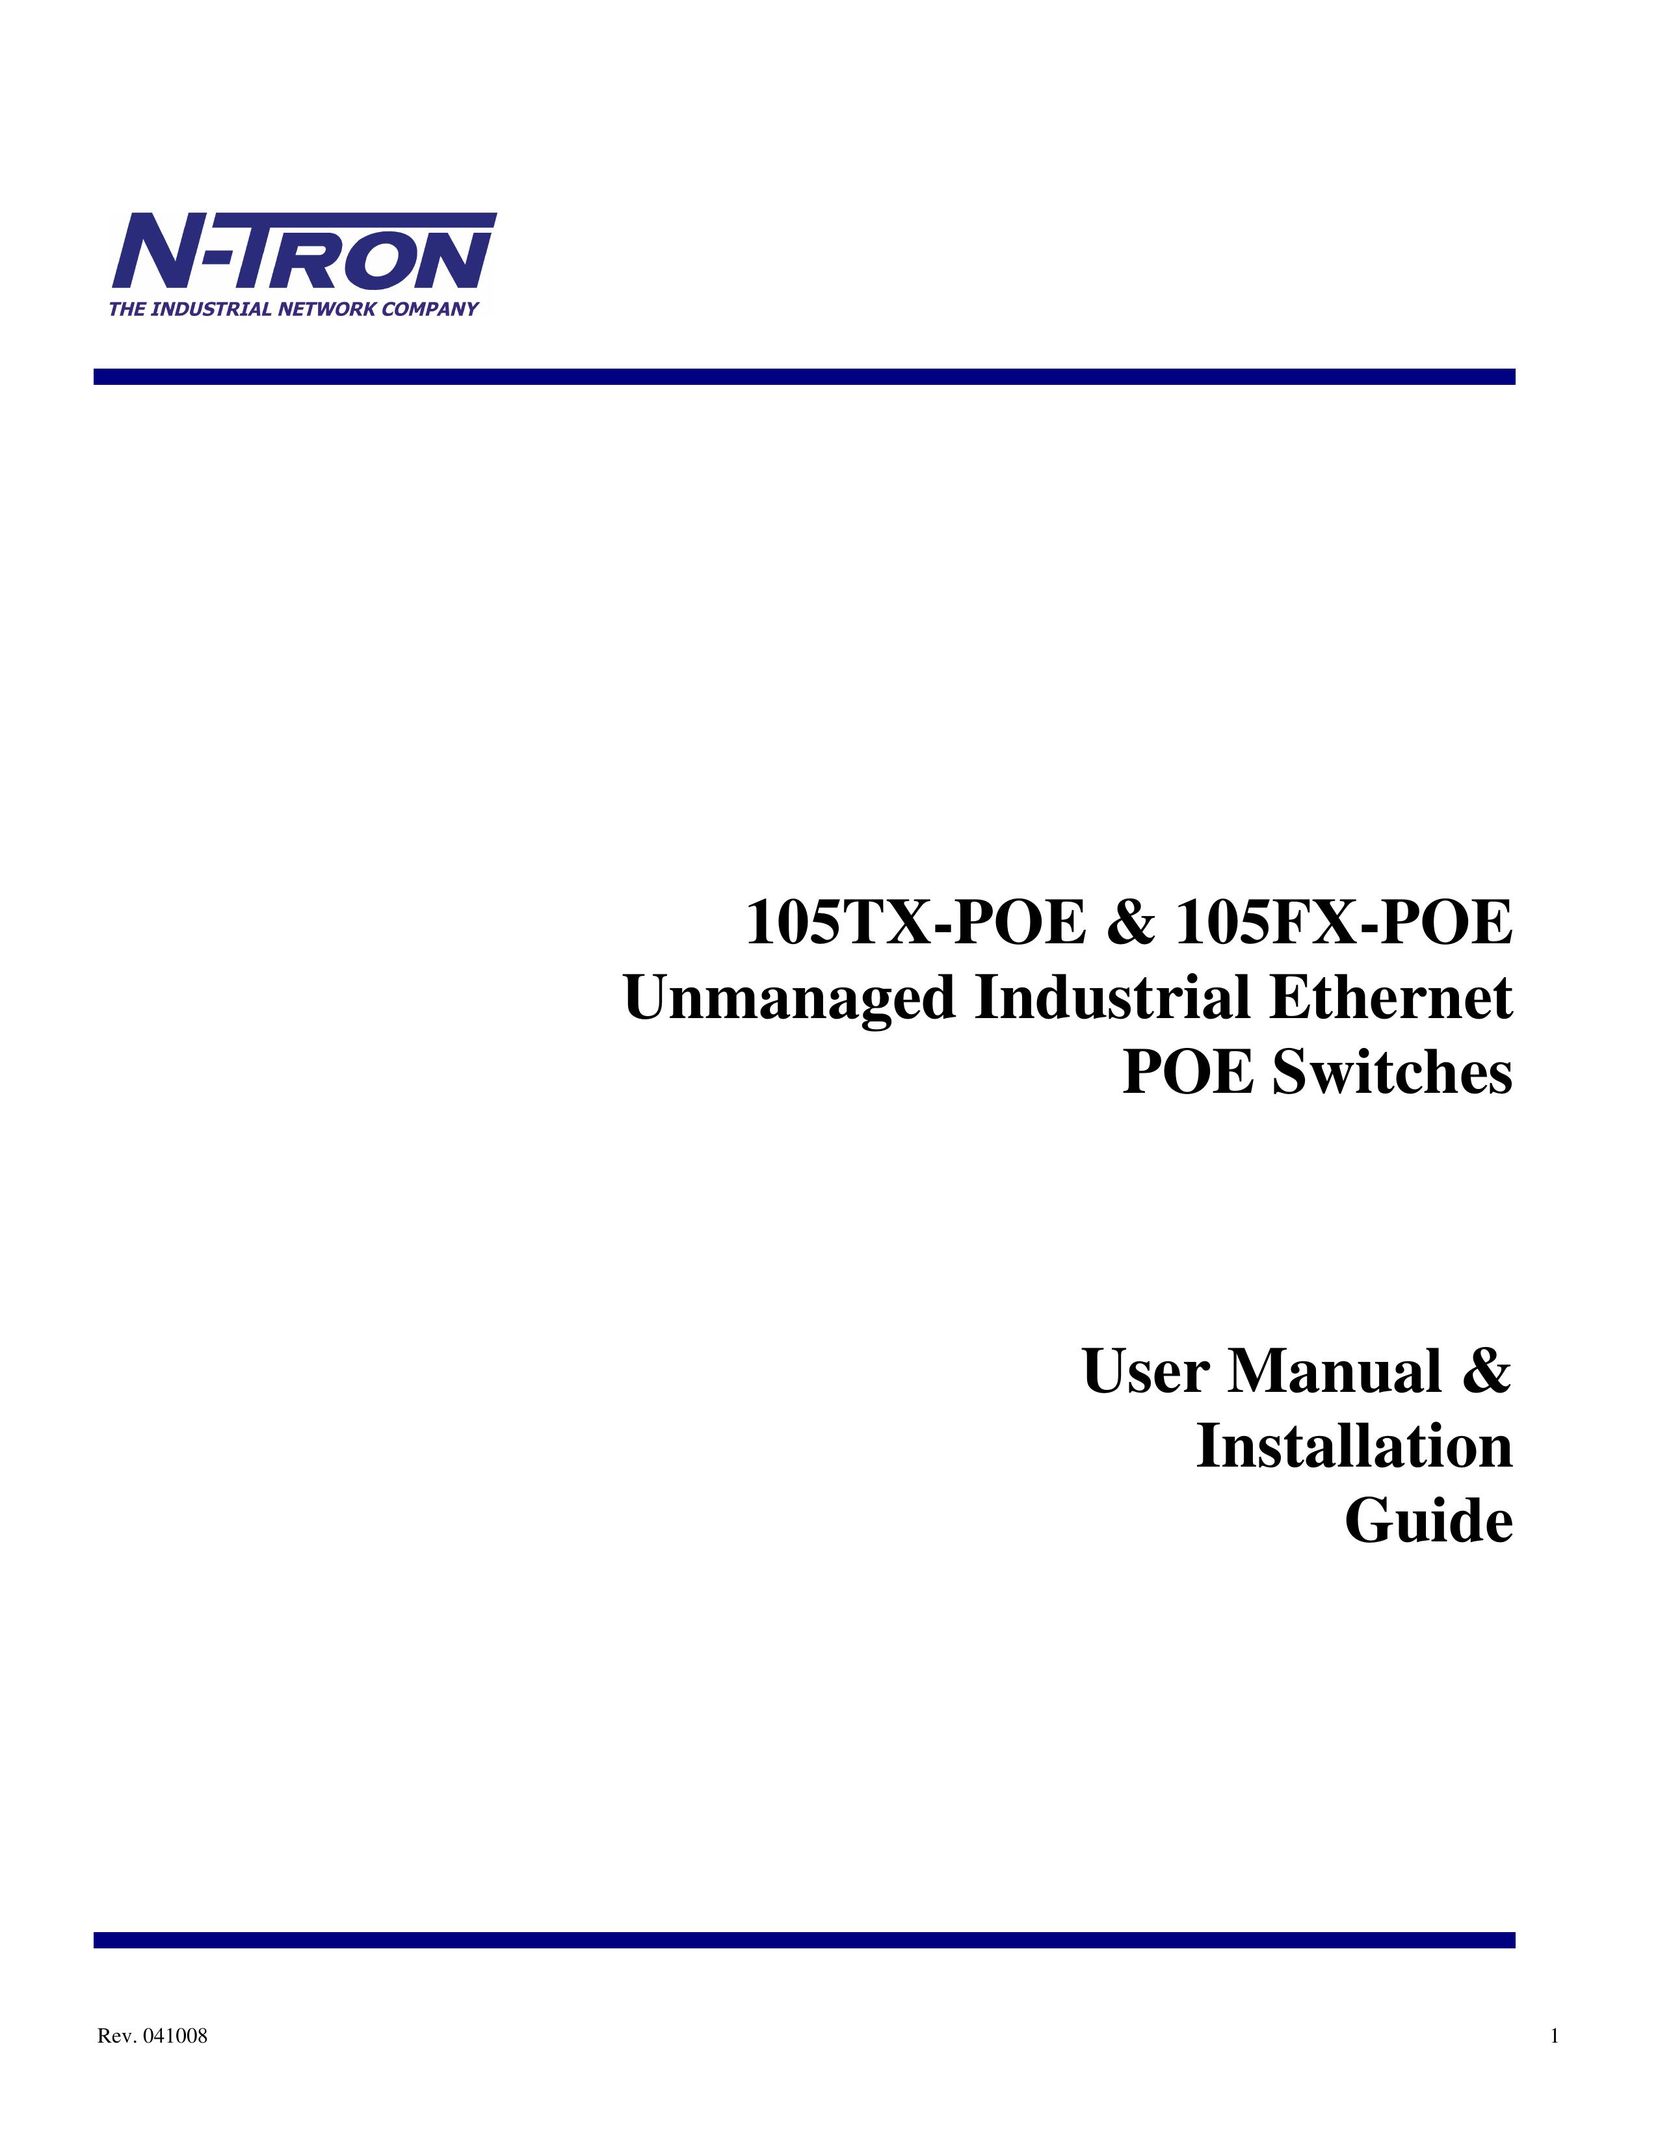 N-Tron 105TX-POE Switch User Manual